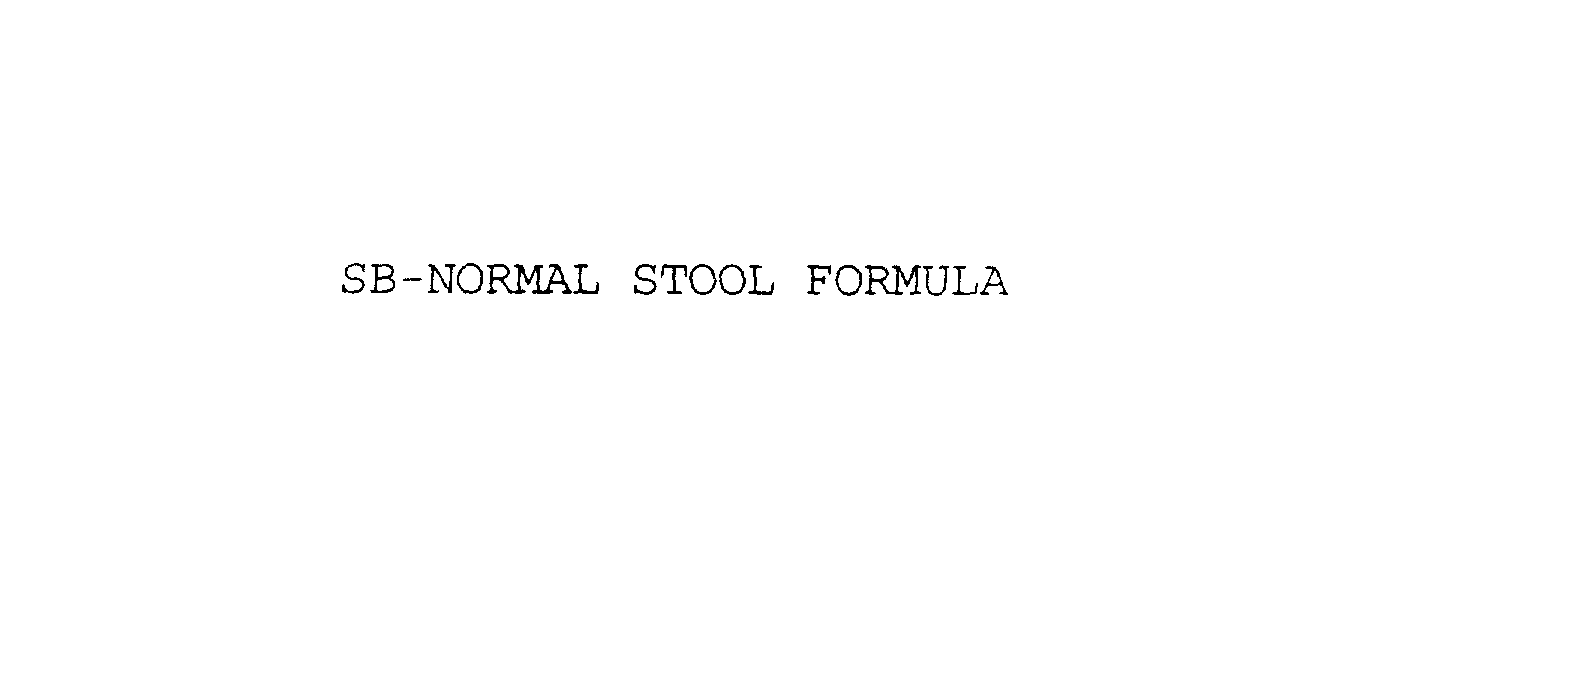  SB-NORMAL STOOL FORMULA